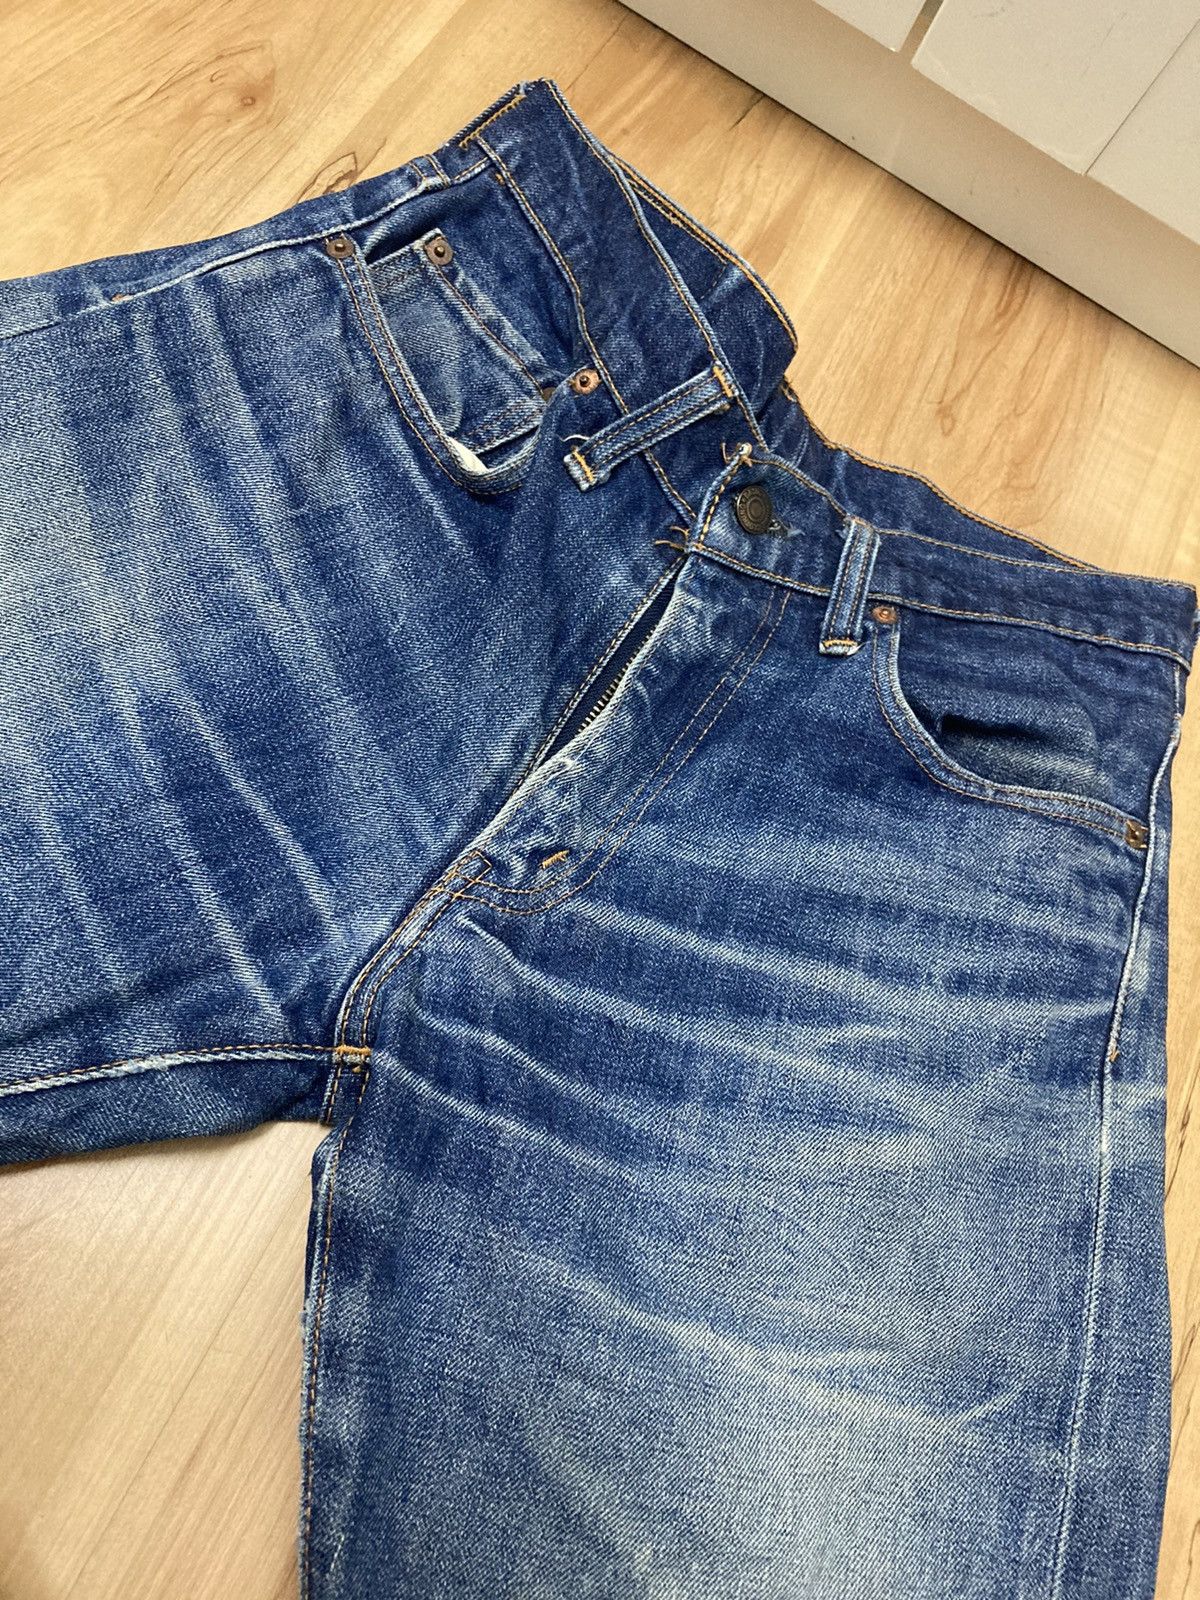 Denime Vintage denime jeans Size US 30 / EU 46 - 3 Thumbnail